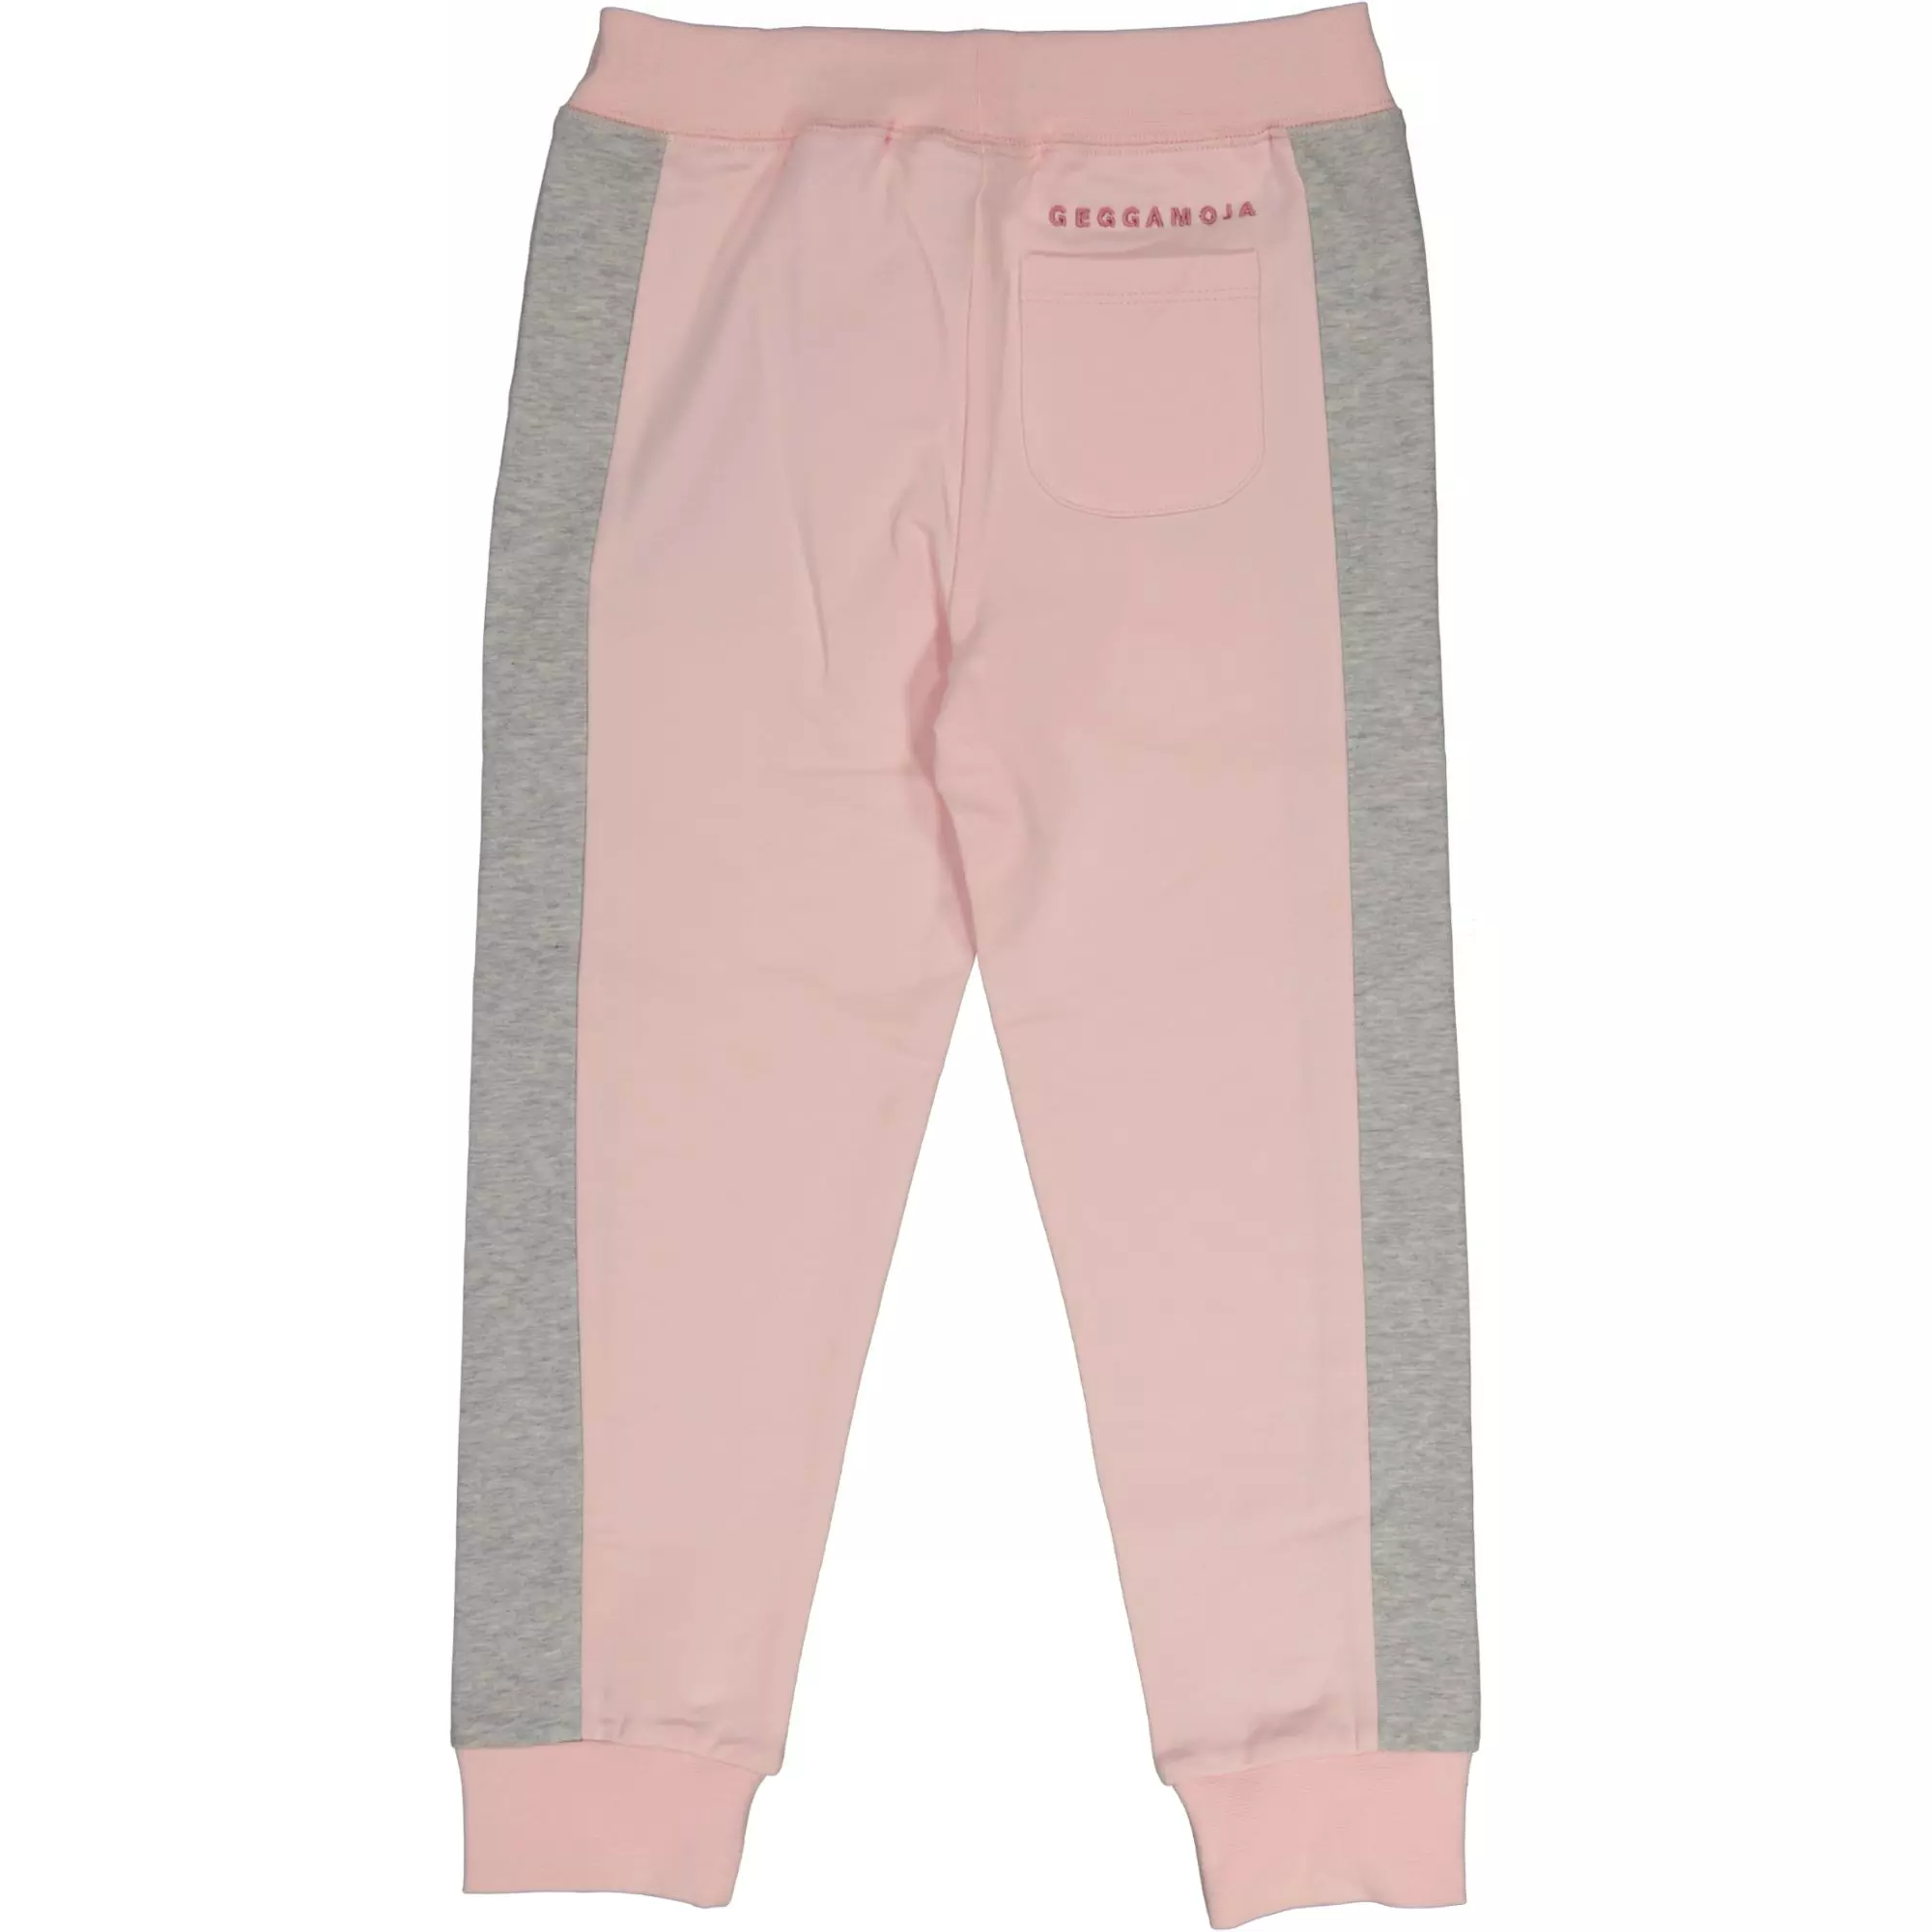 College pants Pink 86/92